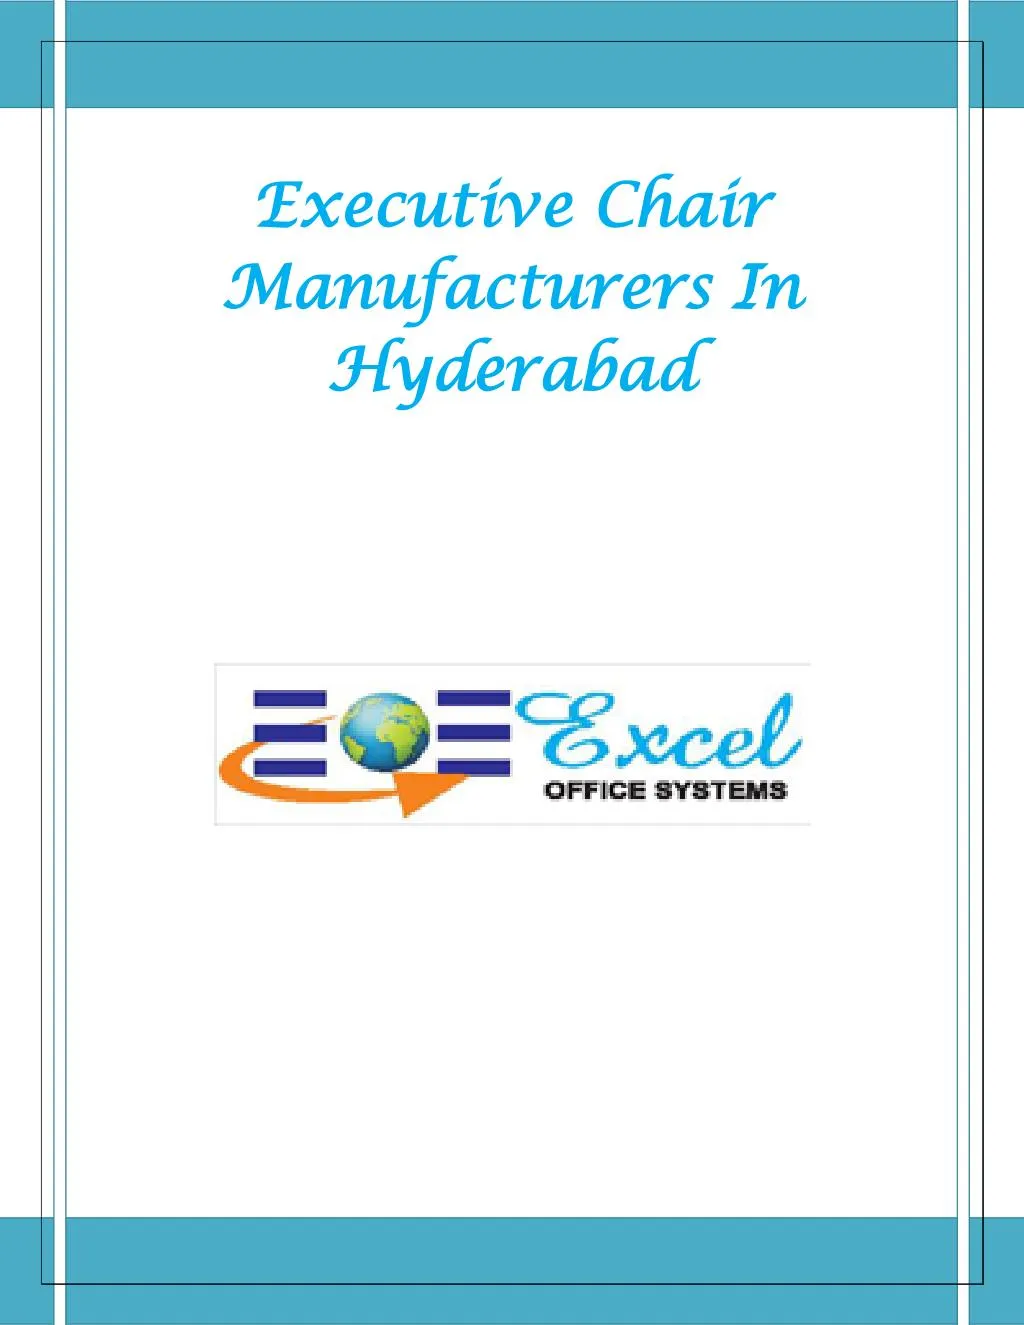 executive chair executive chair manufacturers